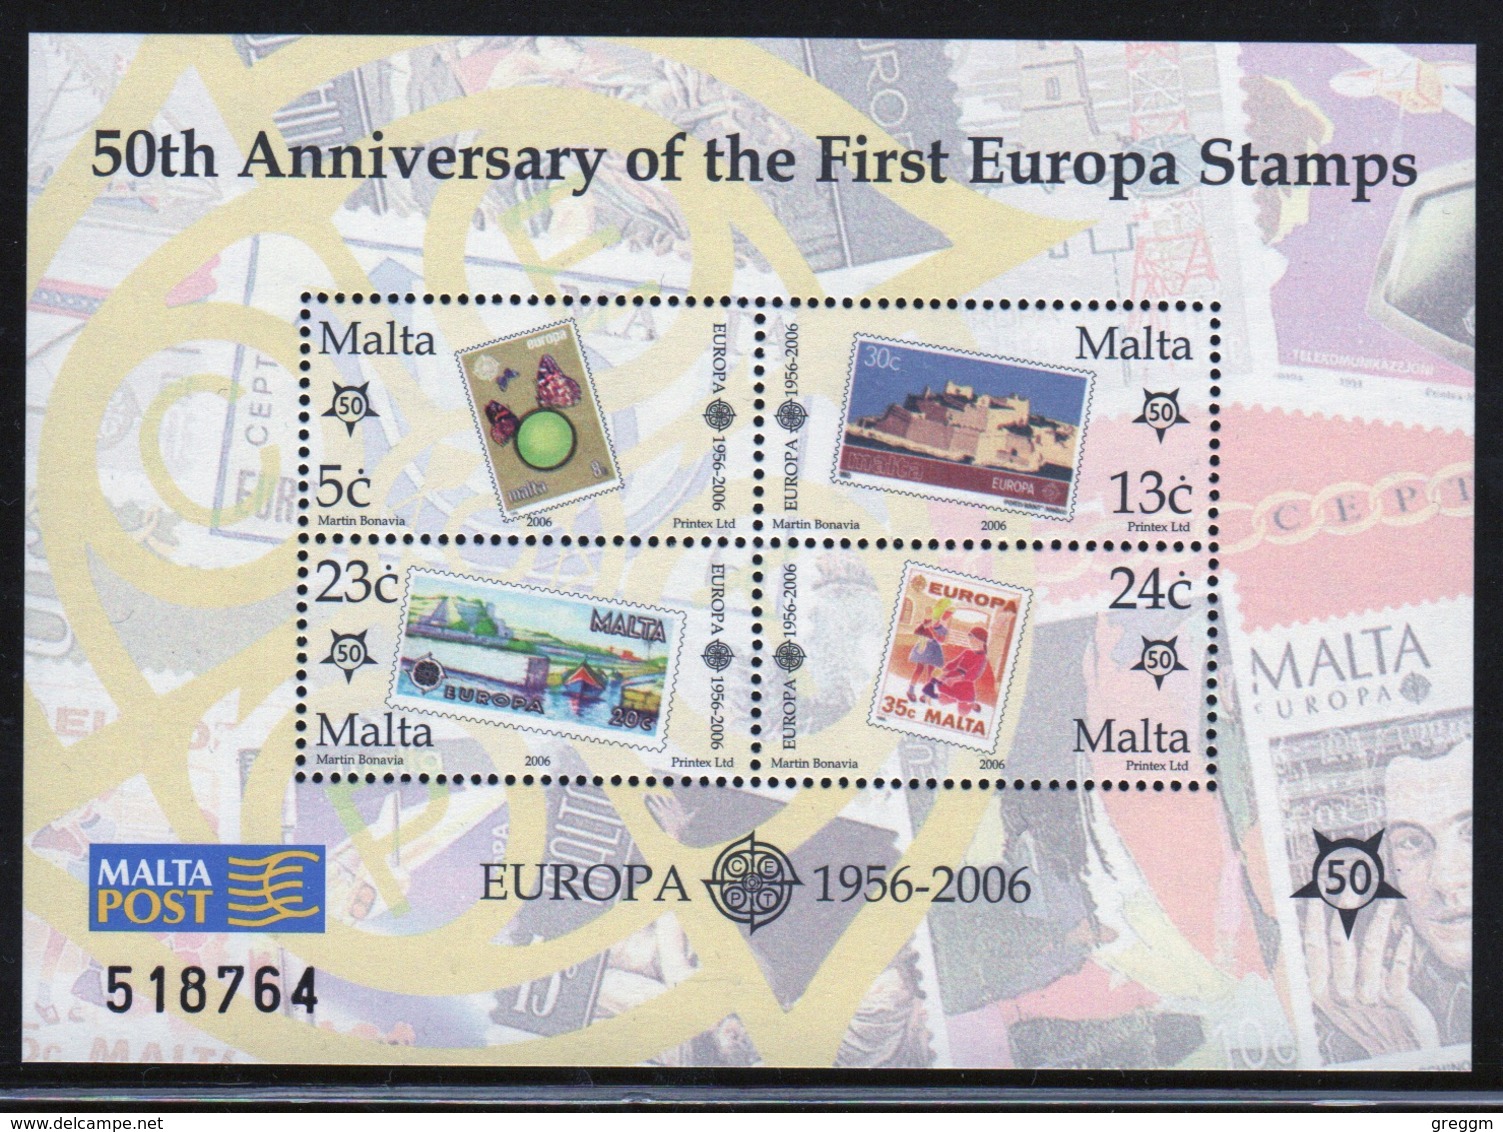 Malta 2006 Mini Sheet To Celebrate 50th Anniversary Of Europa Stamps In Unmounted Mint Condition. - Malta